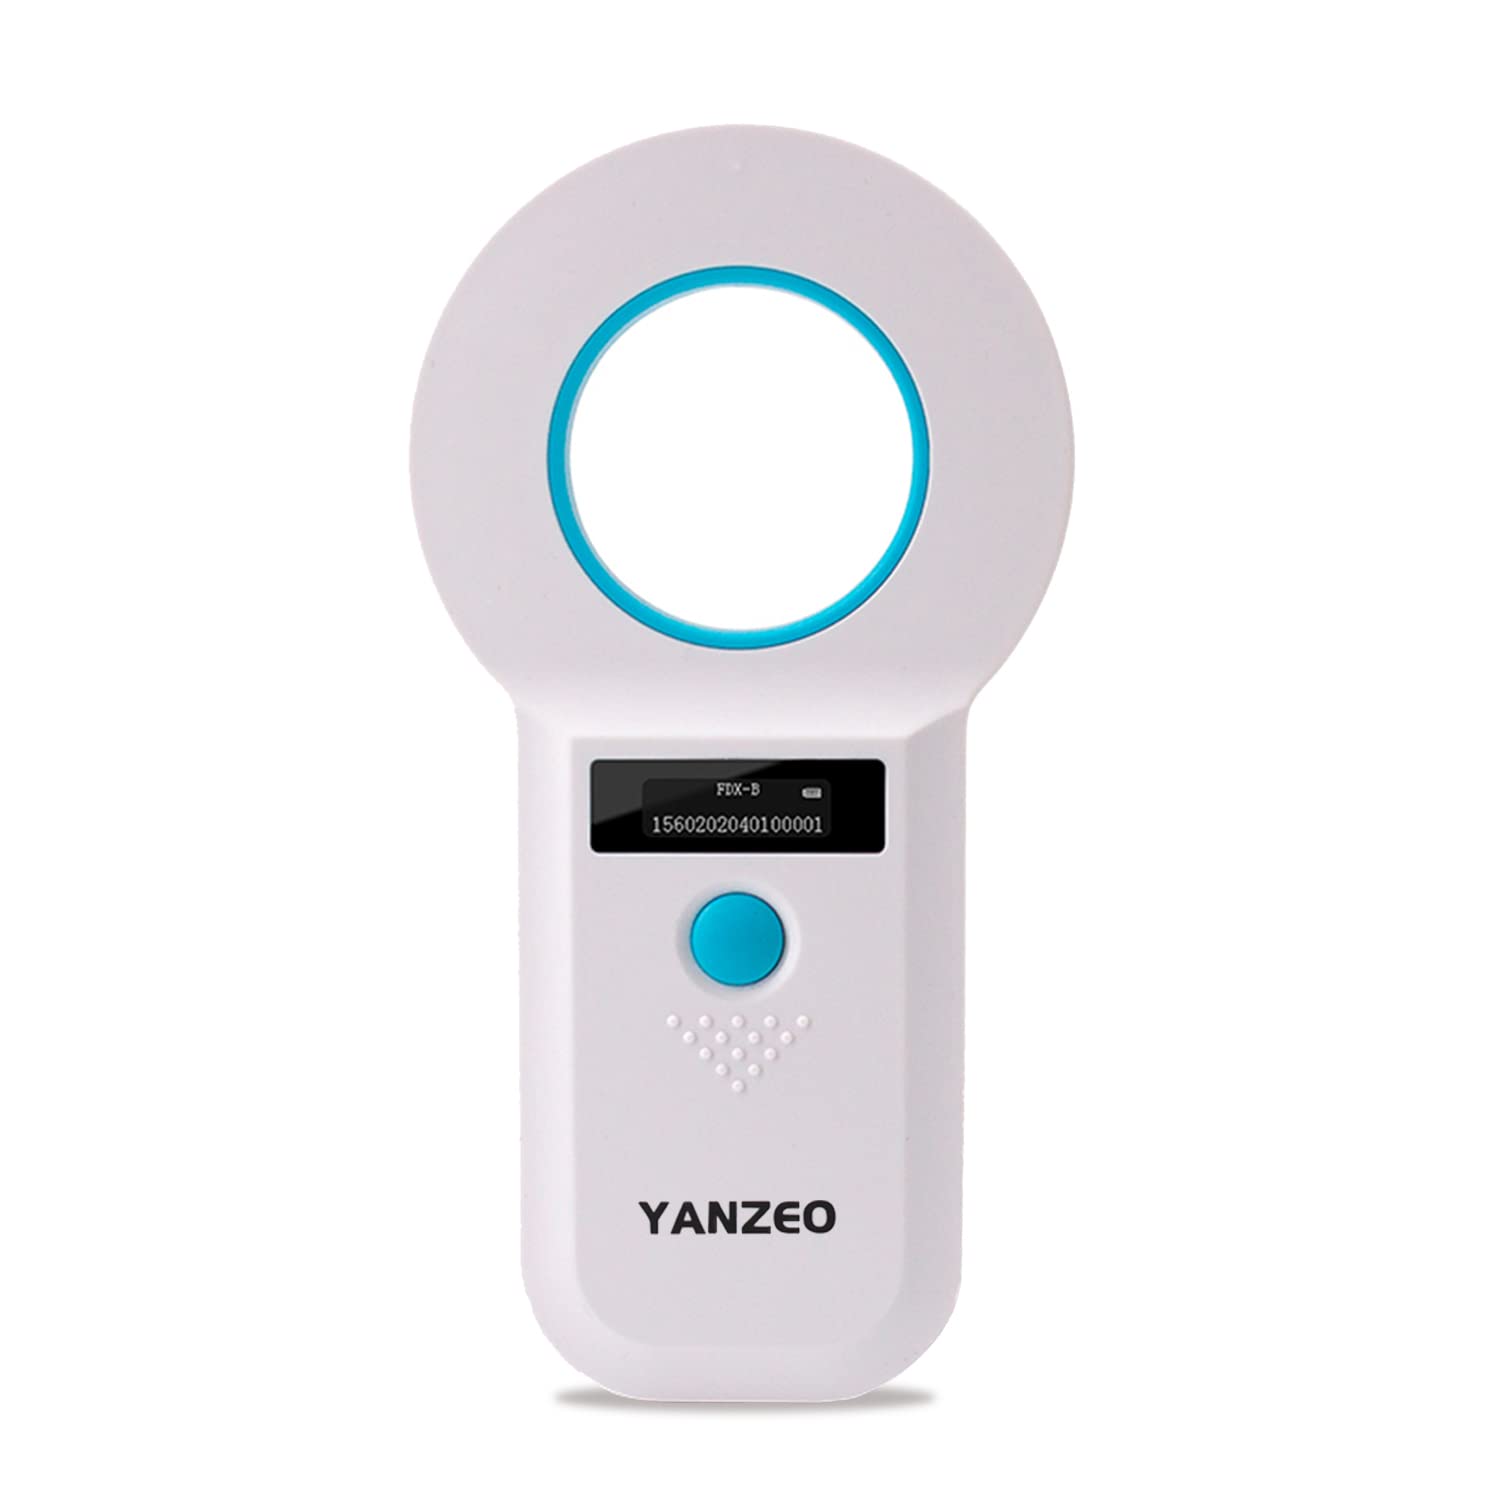 Yanzeo Ar180I Pet Microchip Reader, Microchip Registration, Emid Fdx-B(Iso1178411785) 1342Khz125Khz Animal Id Tag Handheld Scann